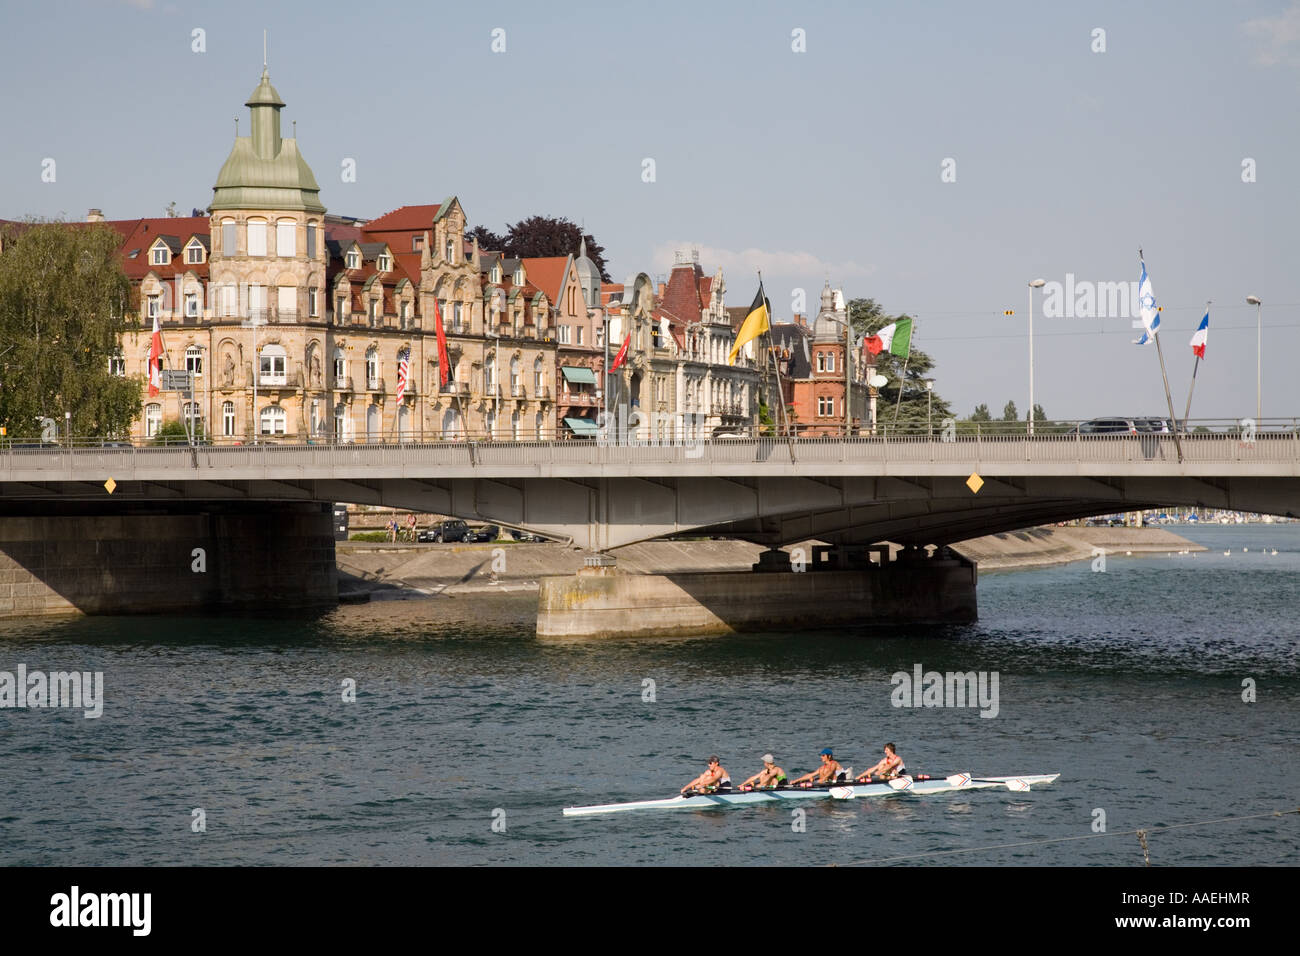 Seestrasse and Rhine Bridge, Konstanz, Constance, Germany Stock Photo